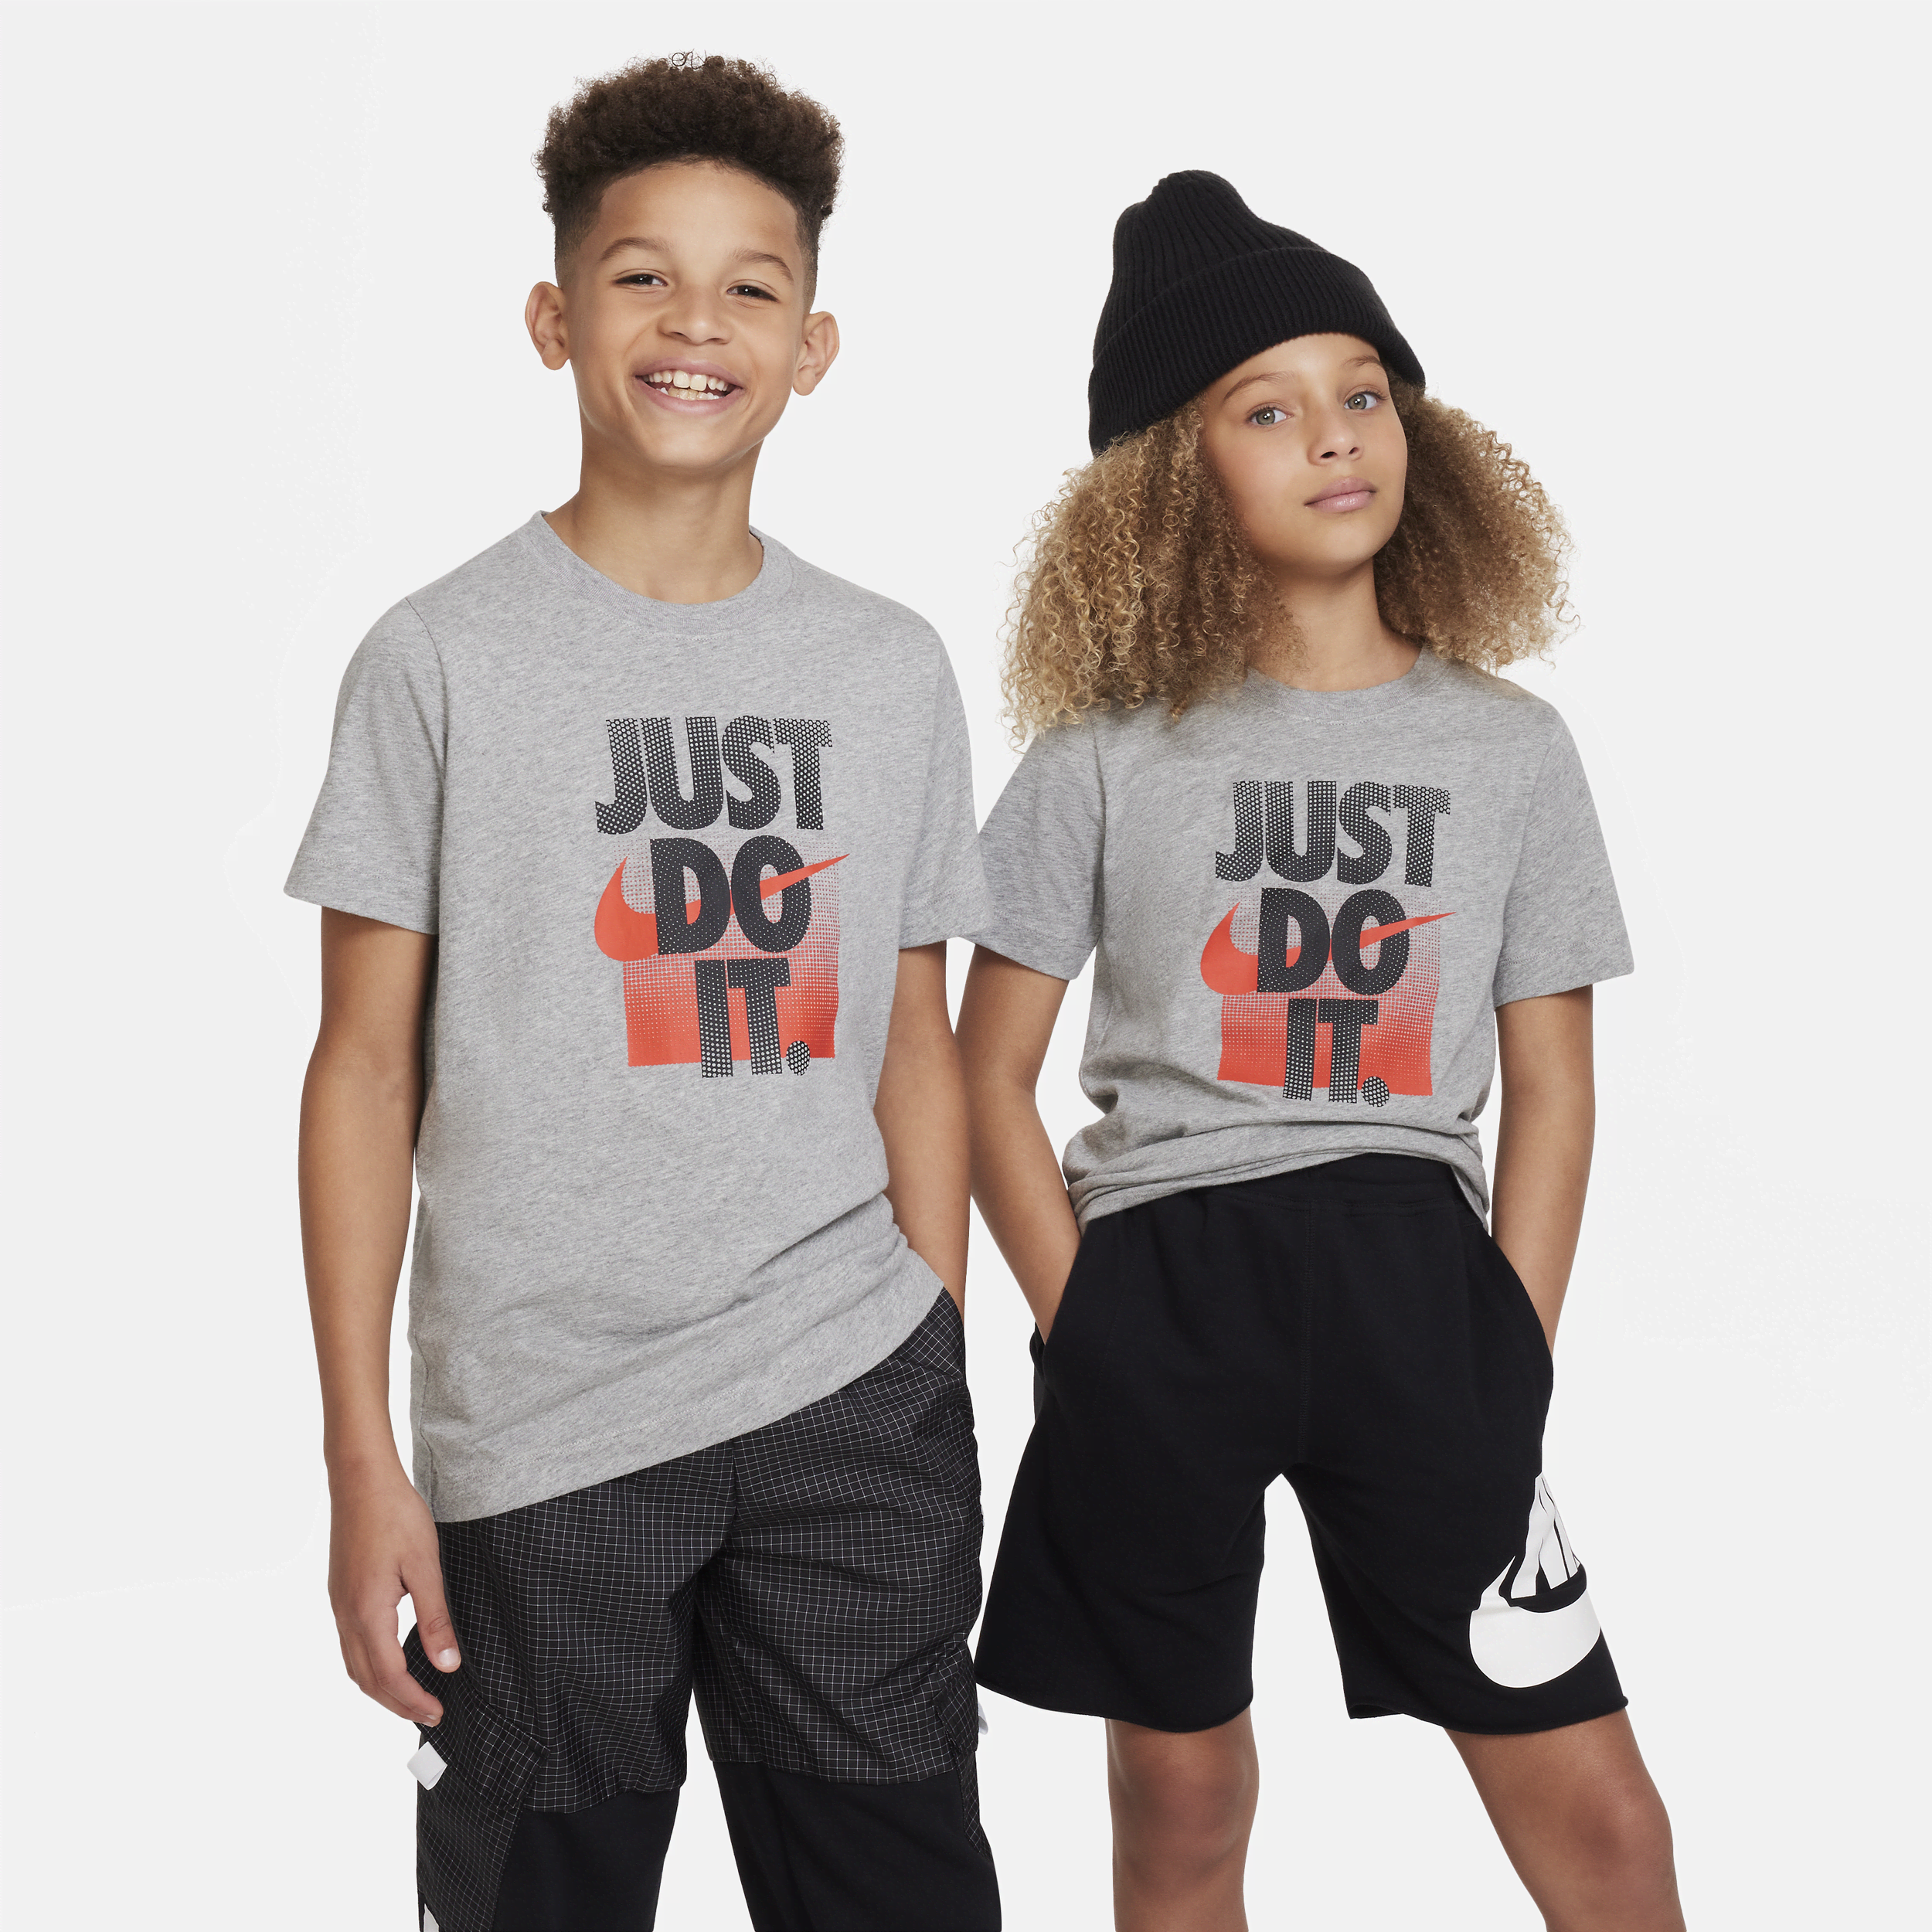 Nike Sportswear Camiseta - Niño/a - Gris